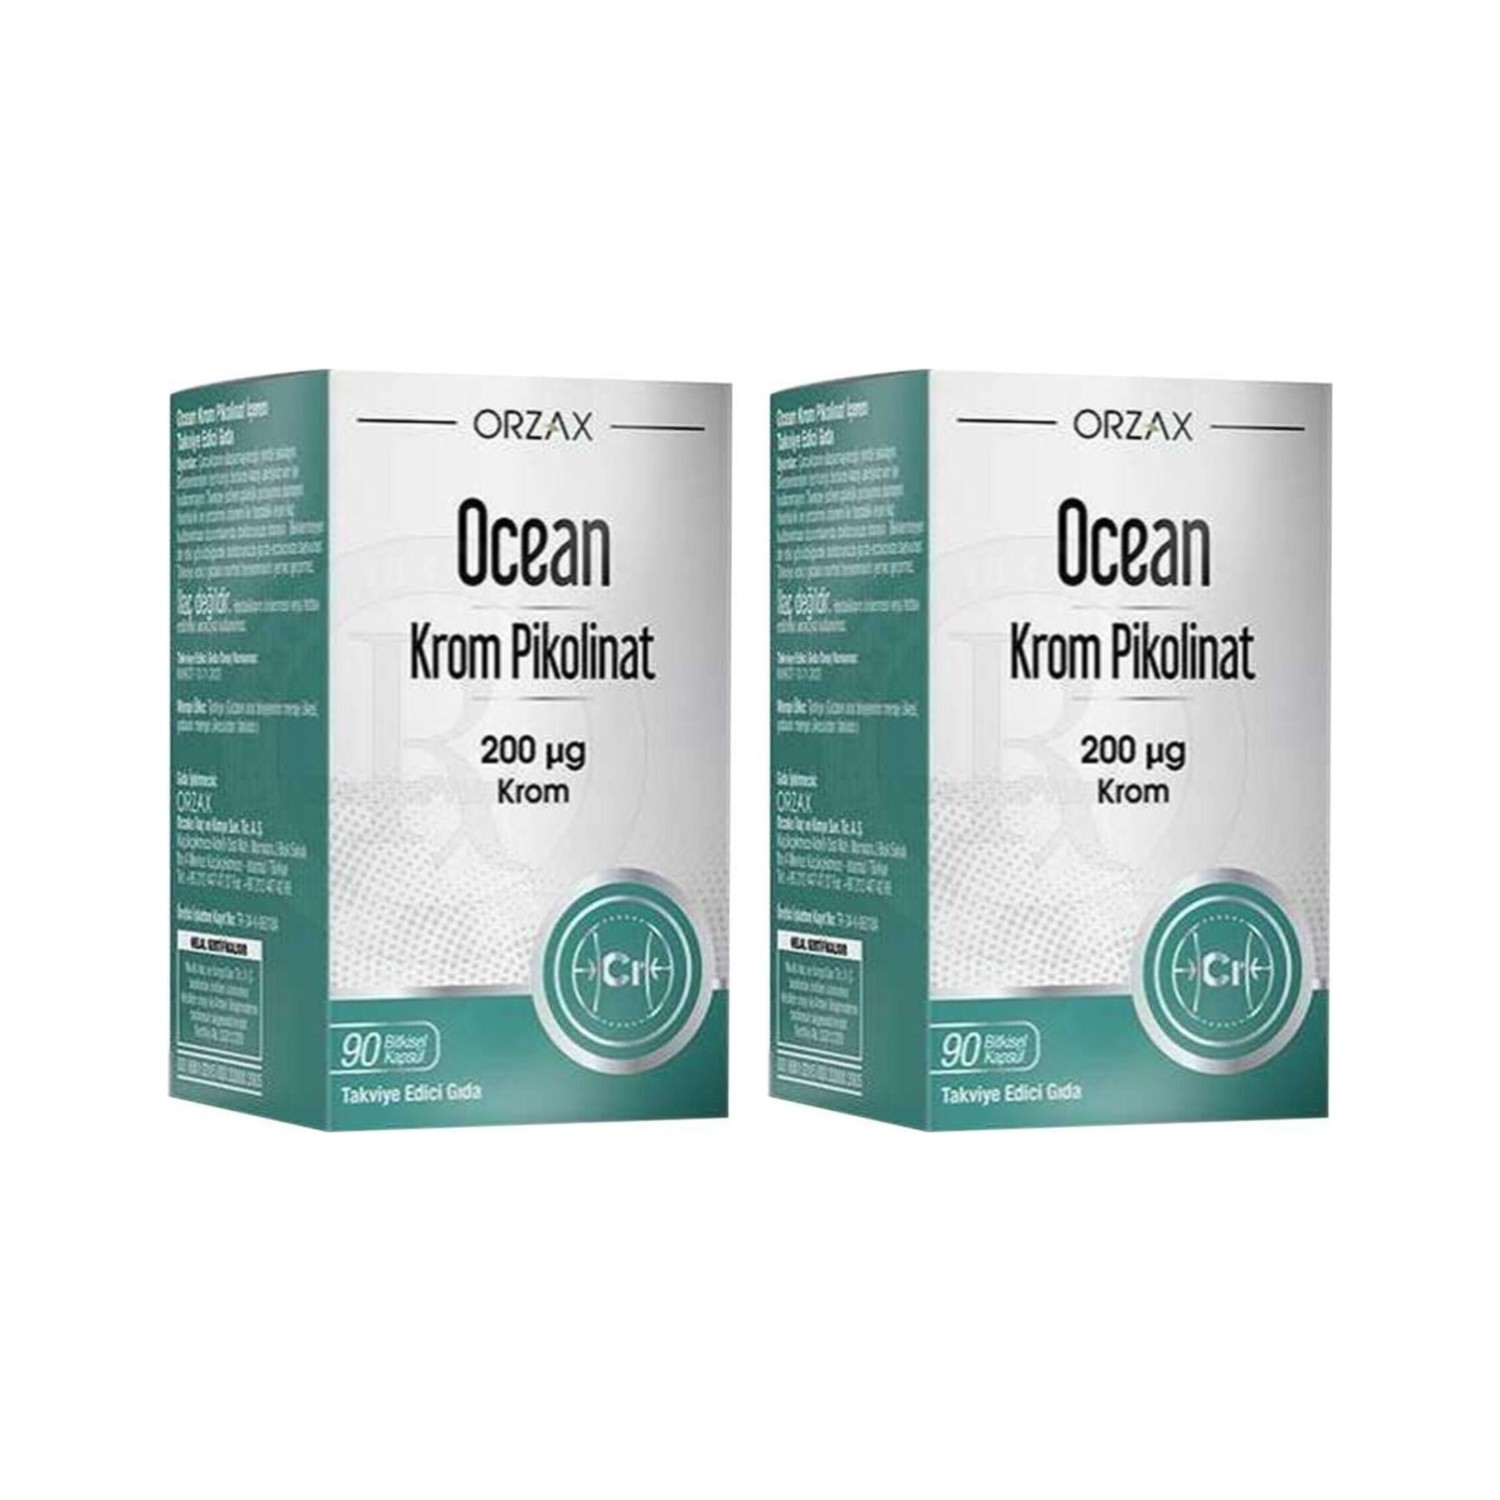 Пиколинат хрома Ocean 200 мкг, 2 упаковки по 90 капсул пиколинат хрома ocean 200 мкг 90 капсул